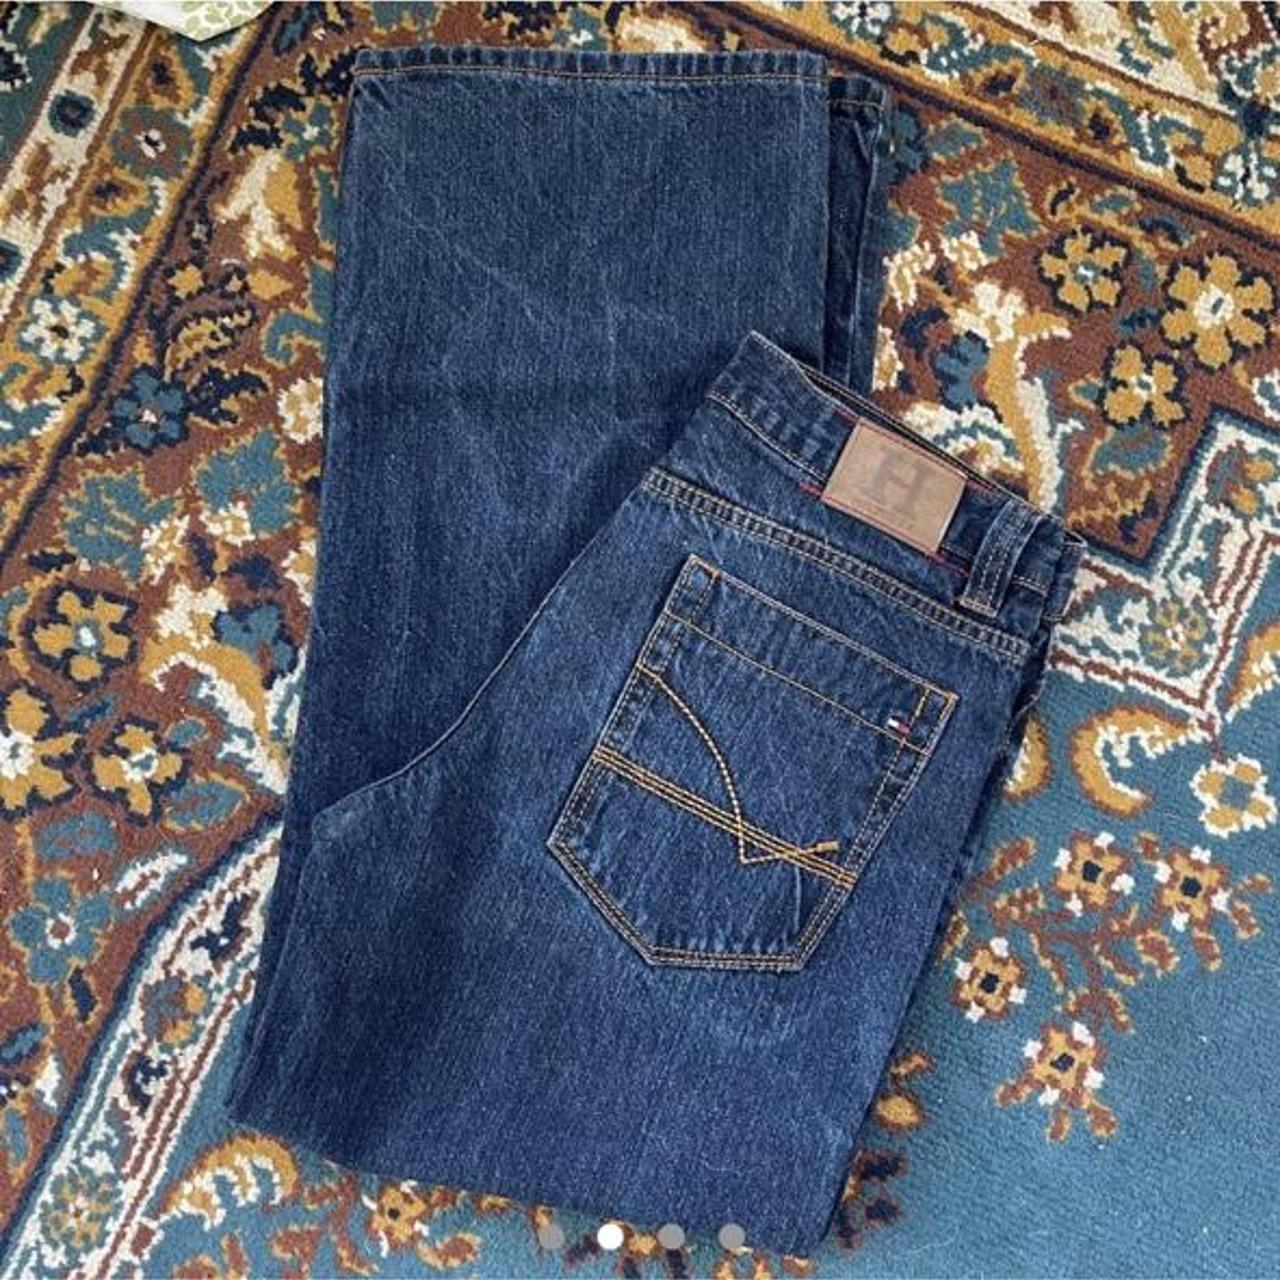 Product Image 2 - Vintage Tommy Hilfiger jeans!
- great